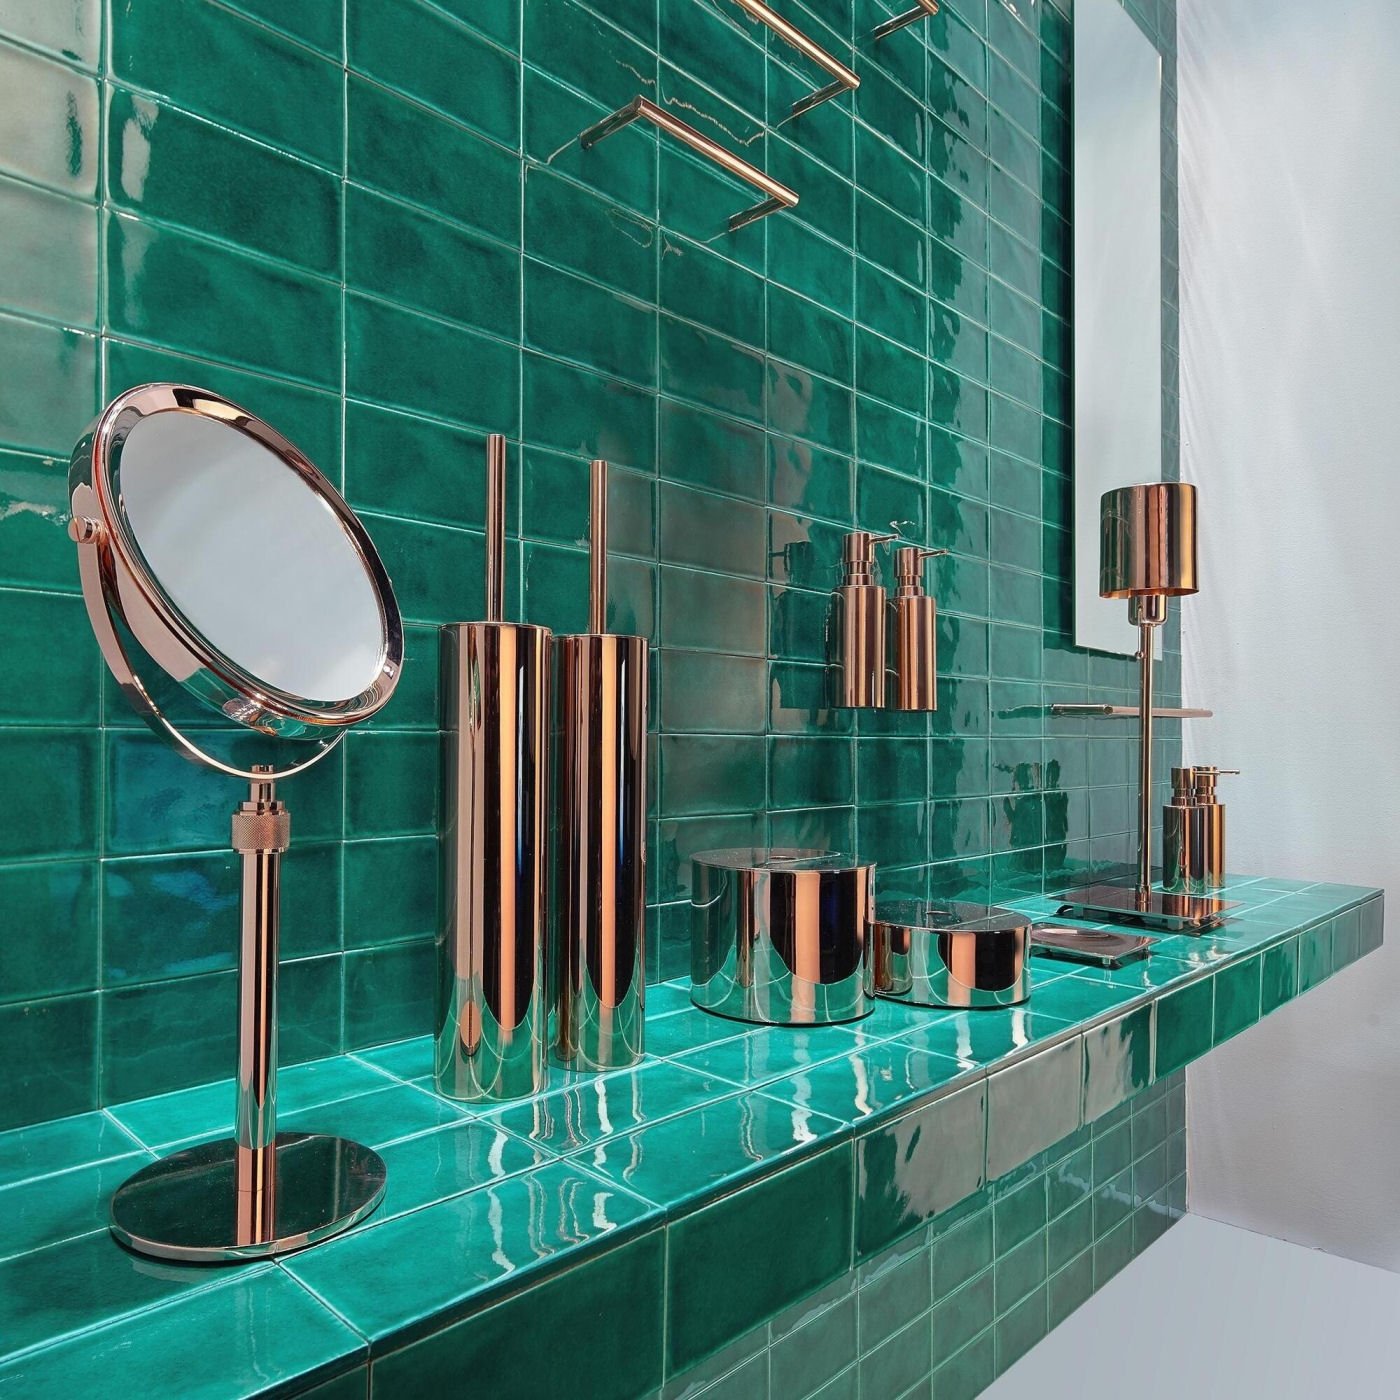 Bathroom Toilet Paper Holder Rose Gold - |VESIMI Design| Luxury Bathrooms and Home Decor